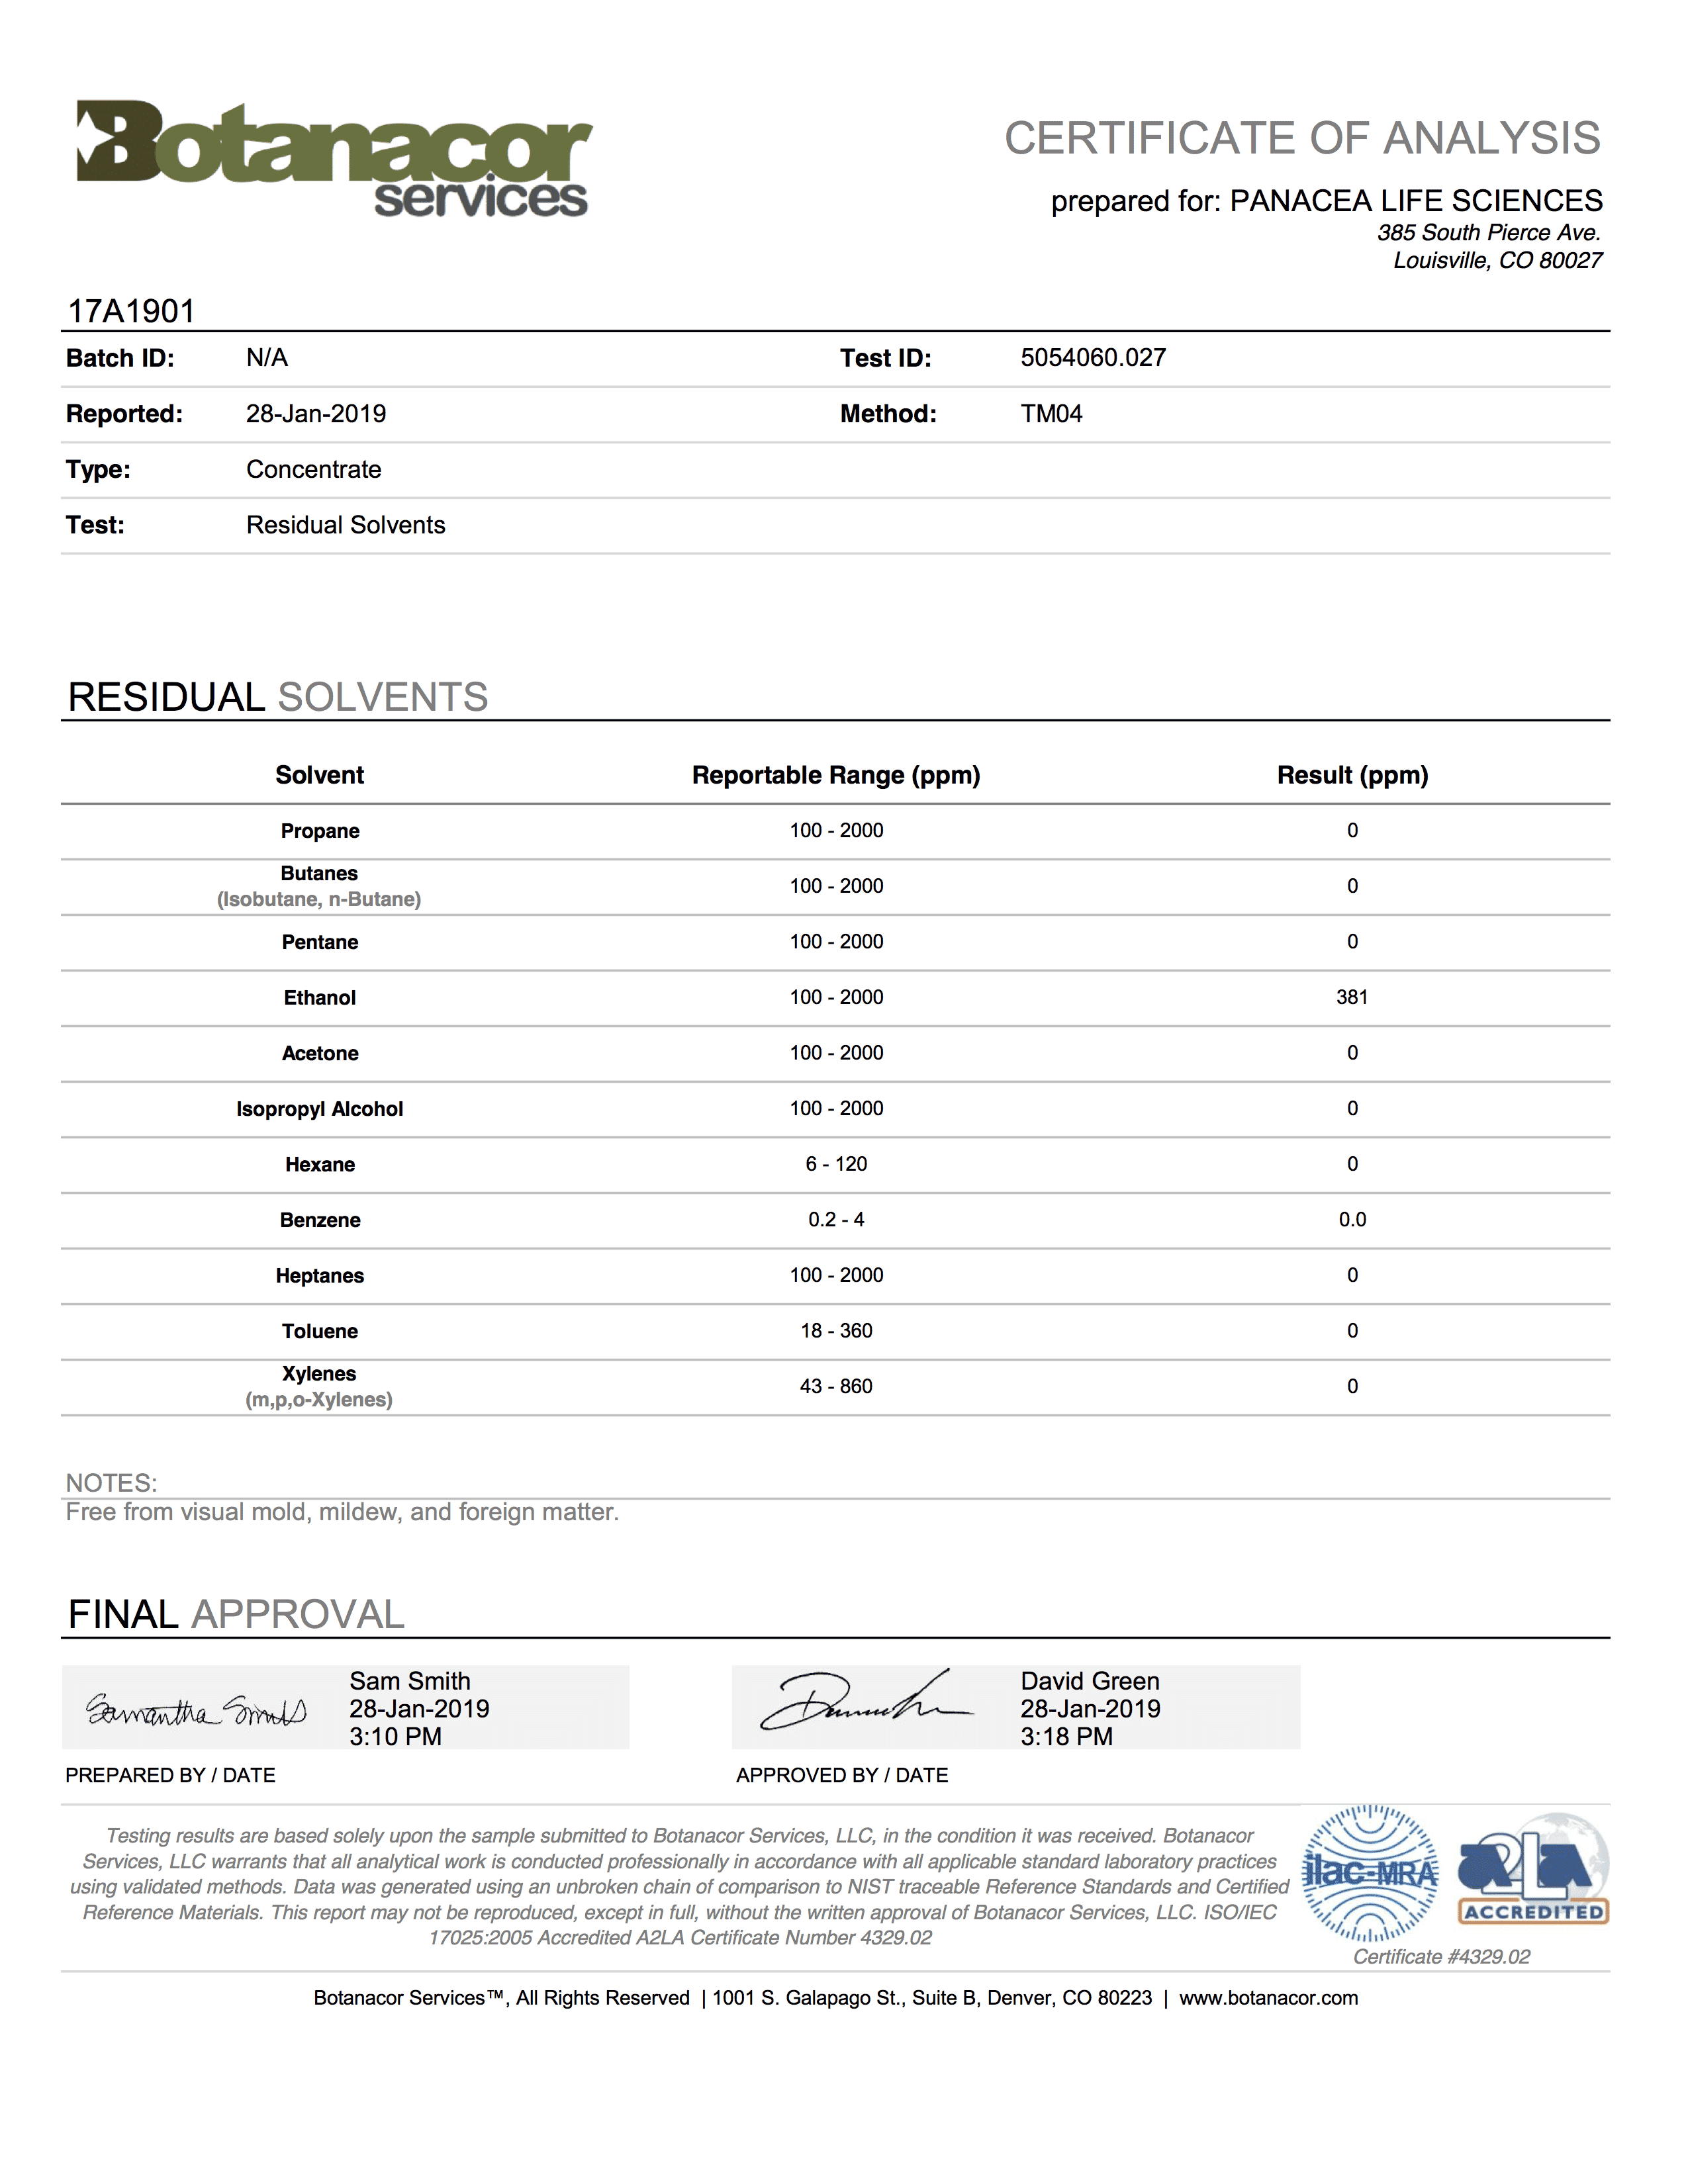 Panacea Test Results - Batch 17A190